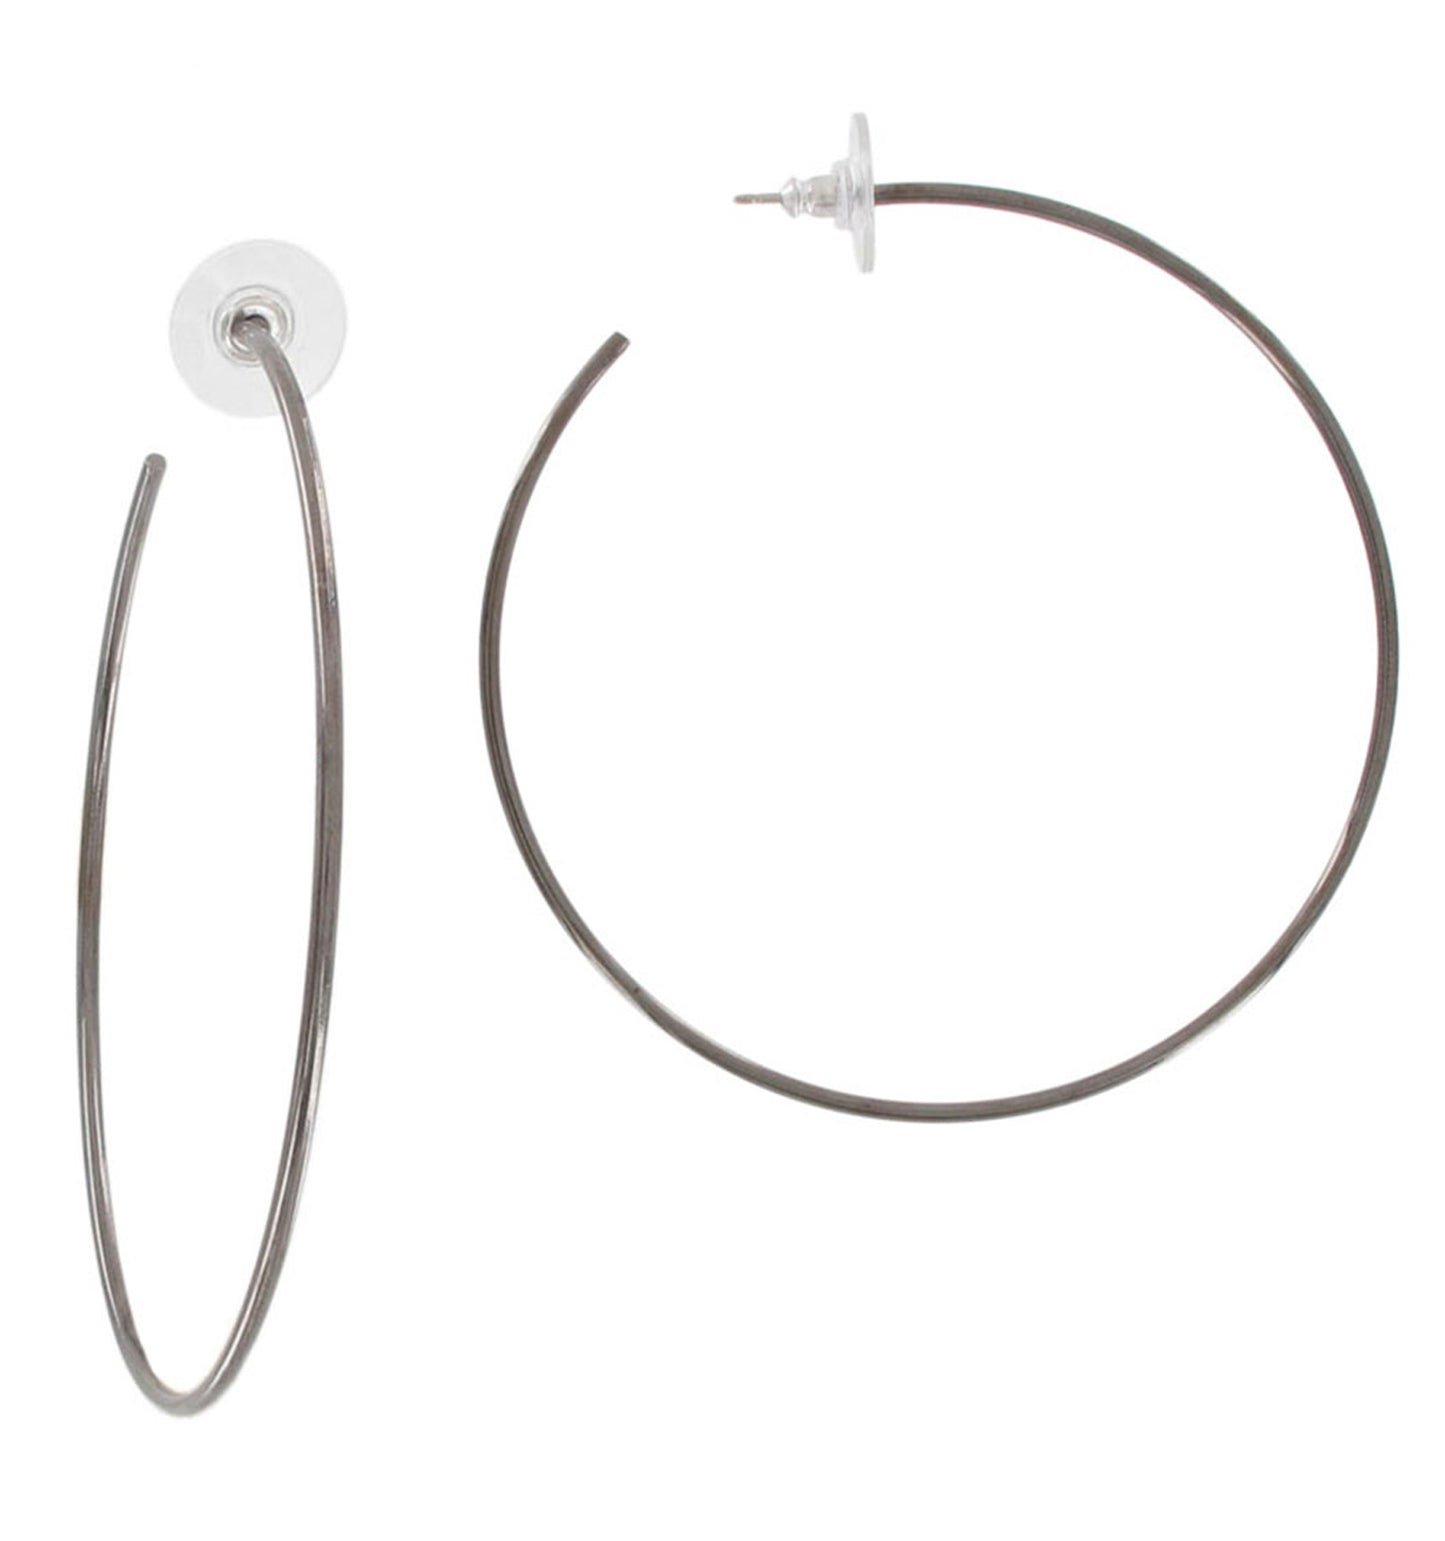 Ky & Co Gun Metal Grey Tone Pierced Hoop Earrings Plain Large 2 5/8" USA Made